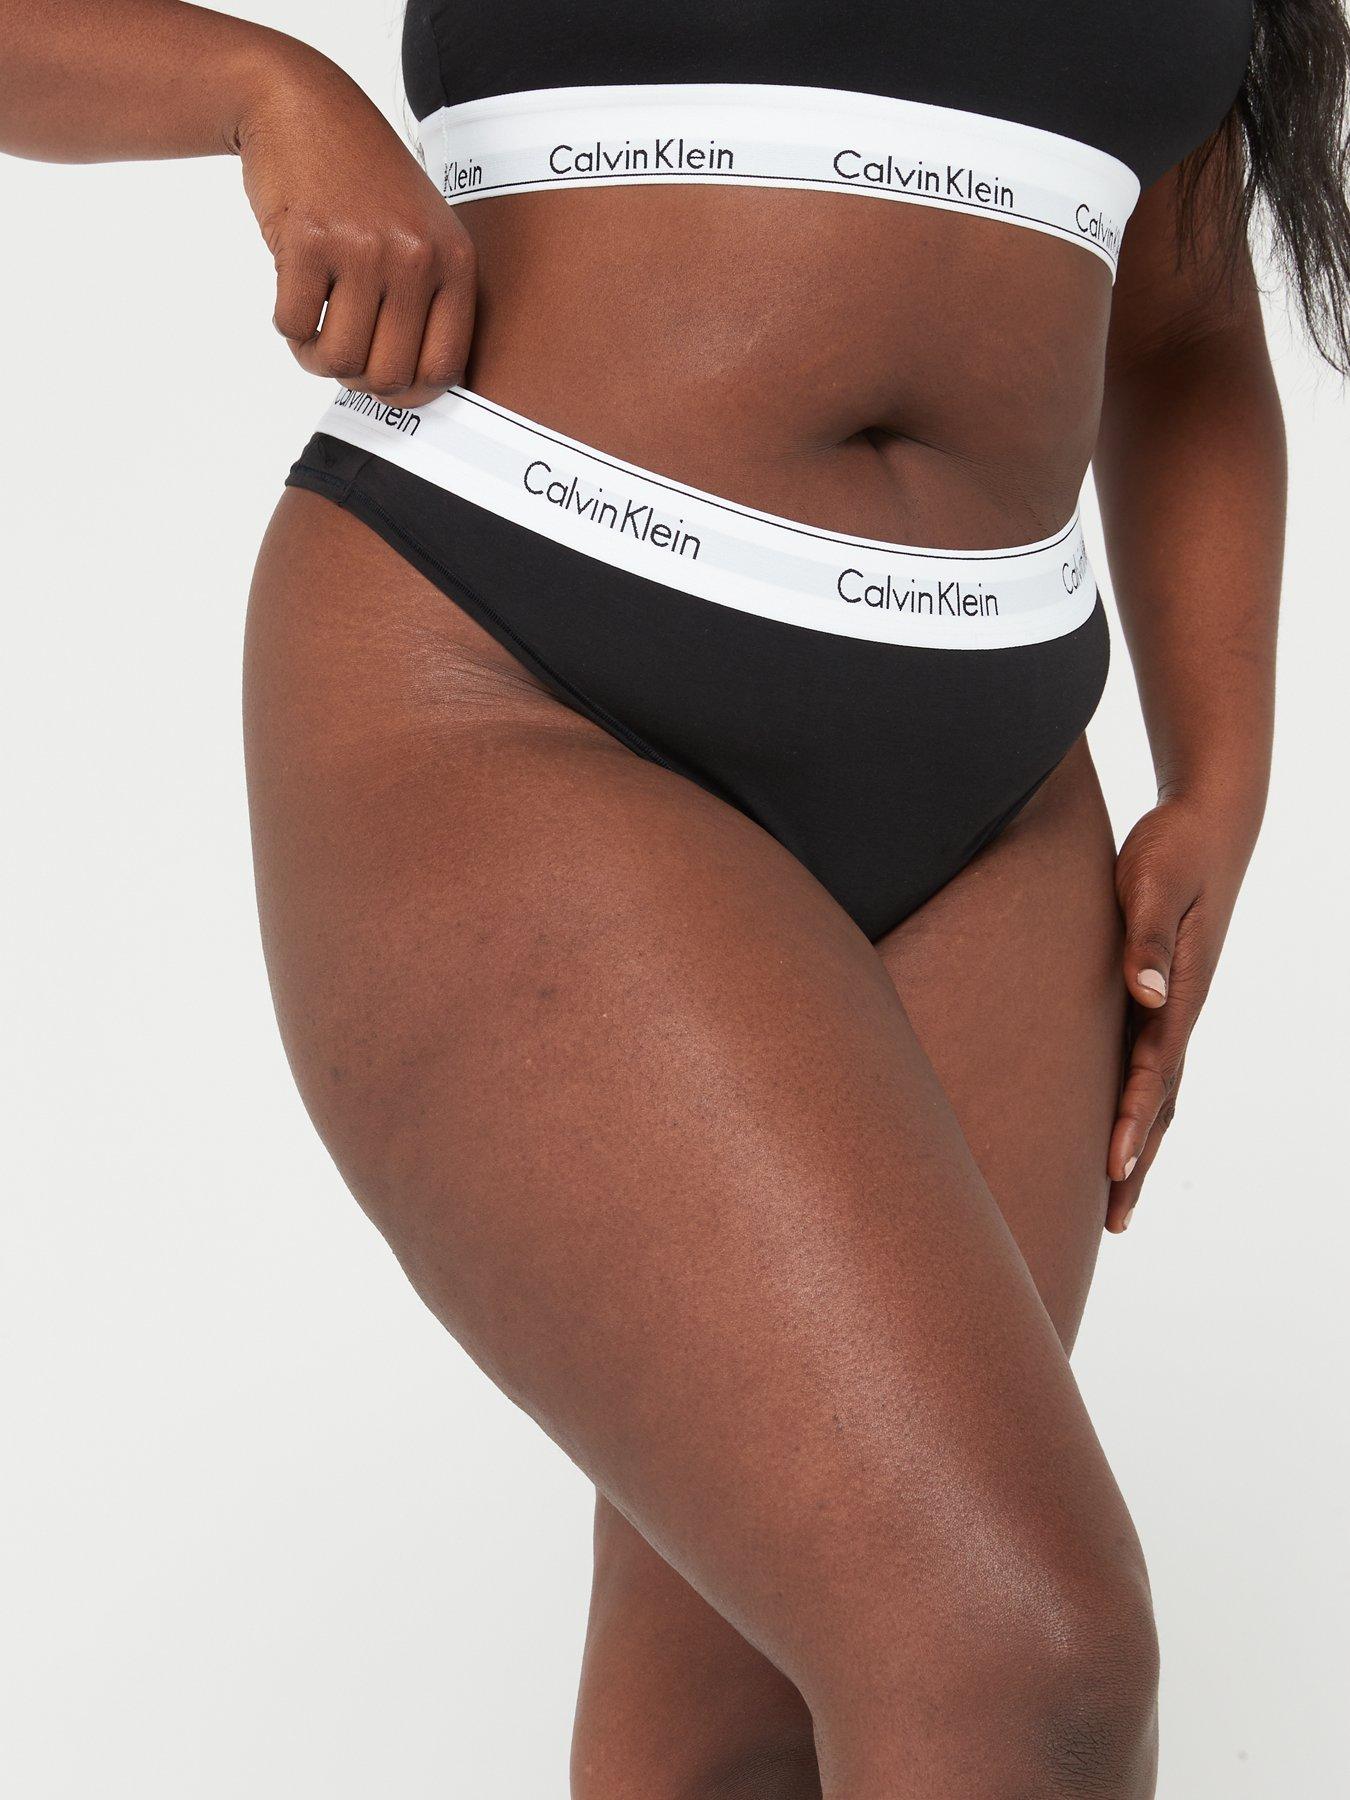 Calvin Klein 3 Pack Carousel Thong - Black/White/Black - Utility Bear  Apparel & Accessories